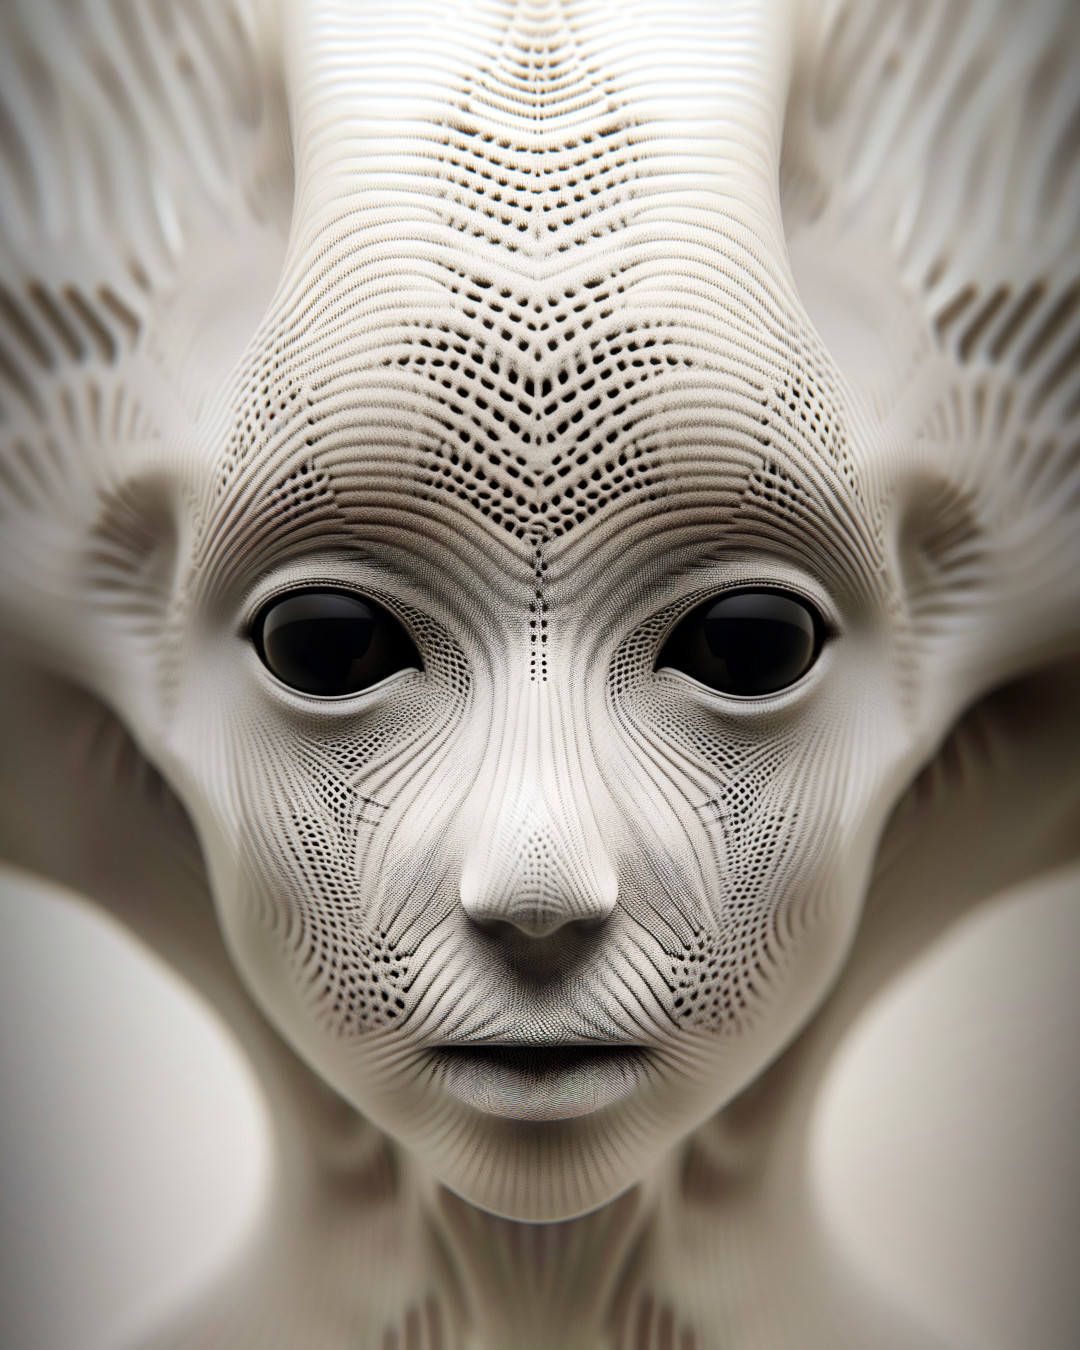 Portrait of an alien, symmetrical patterns, white porcelain skin